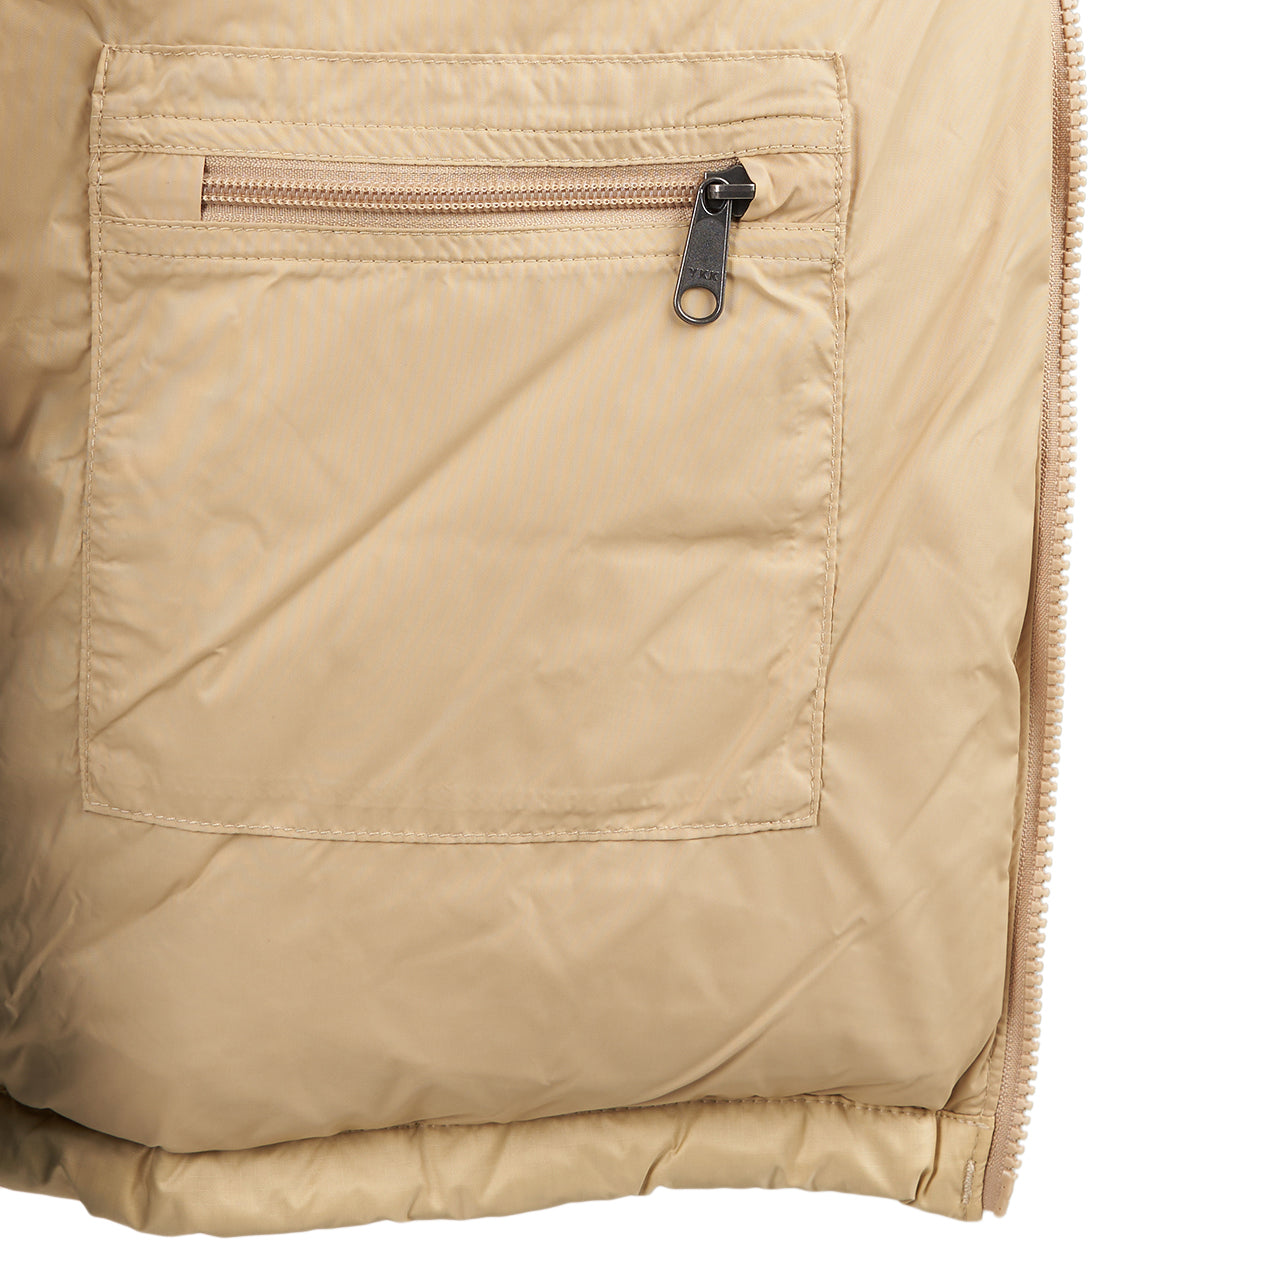 The North Face WMNS 1996 Retro Nuptse Jacket (Khaki)  - Allike Store